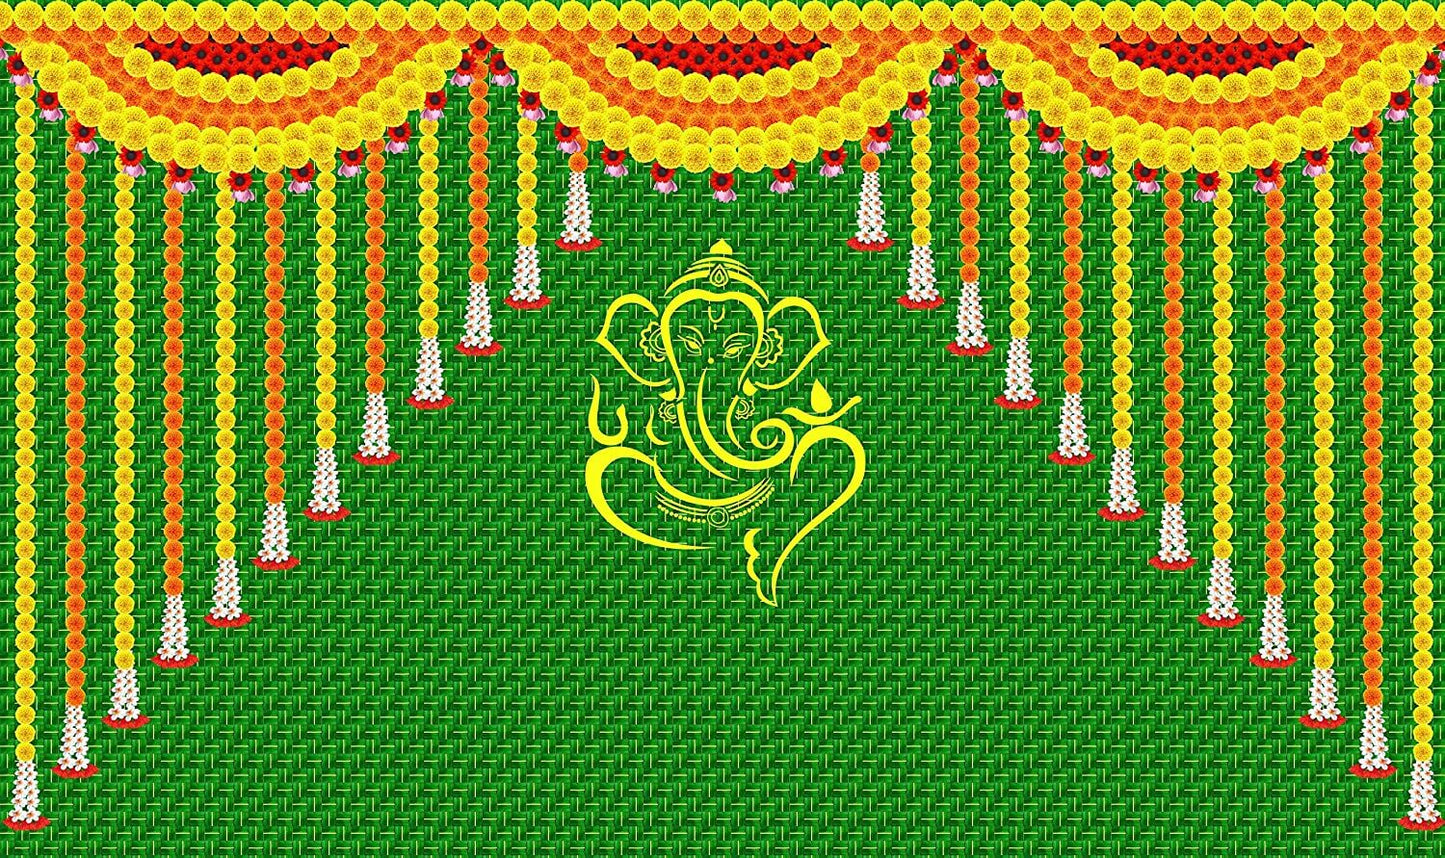 5 x 8 Ft - Green Chatiya With Yellow Ganesh Ji - Traditional Backdrop Curtain for Pooja / Festival (Taiwan Polyester Fabric) (Washable)